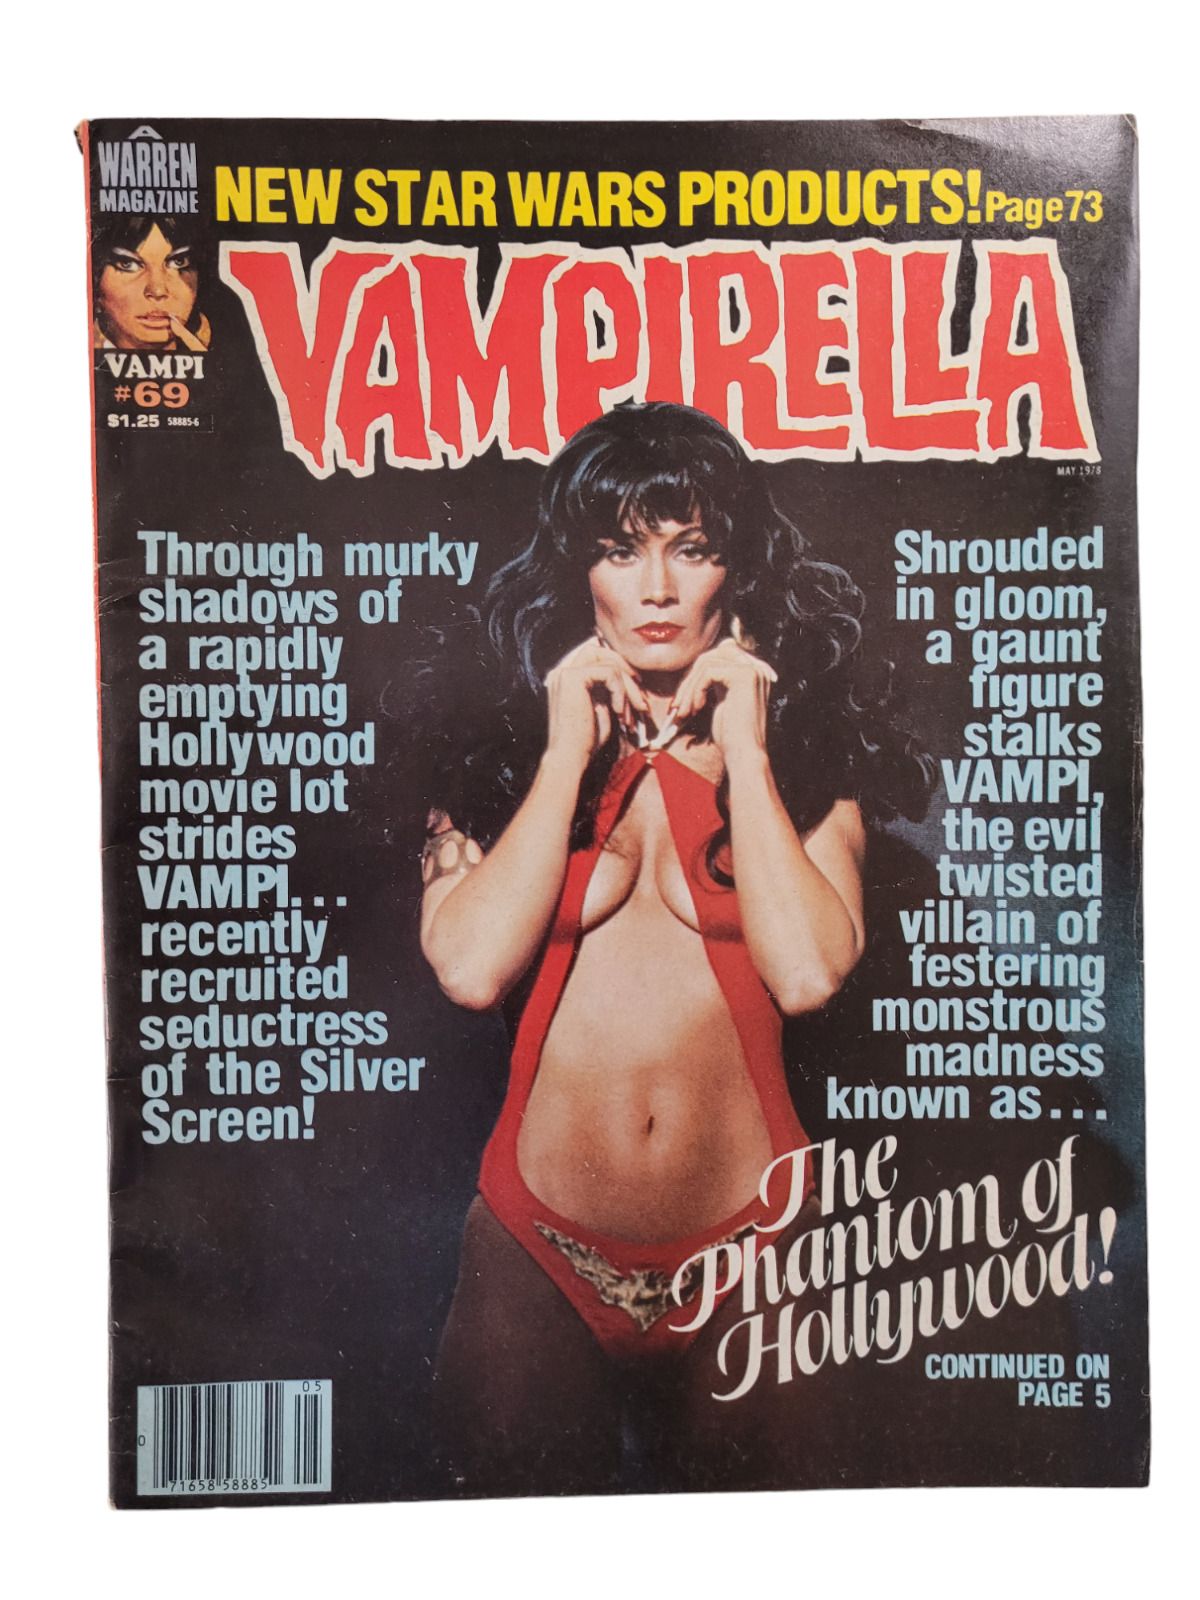 1978 Vampirella #69 Warren Magazine The Phantom of Hollywood Bronze Age 